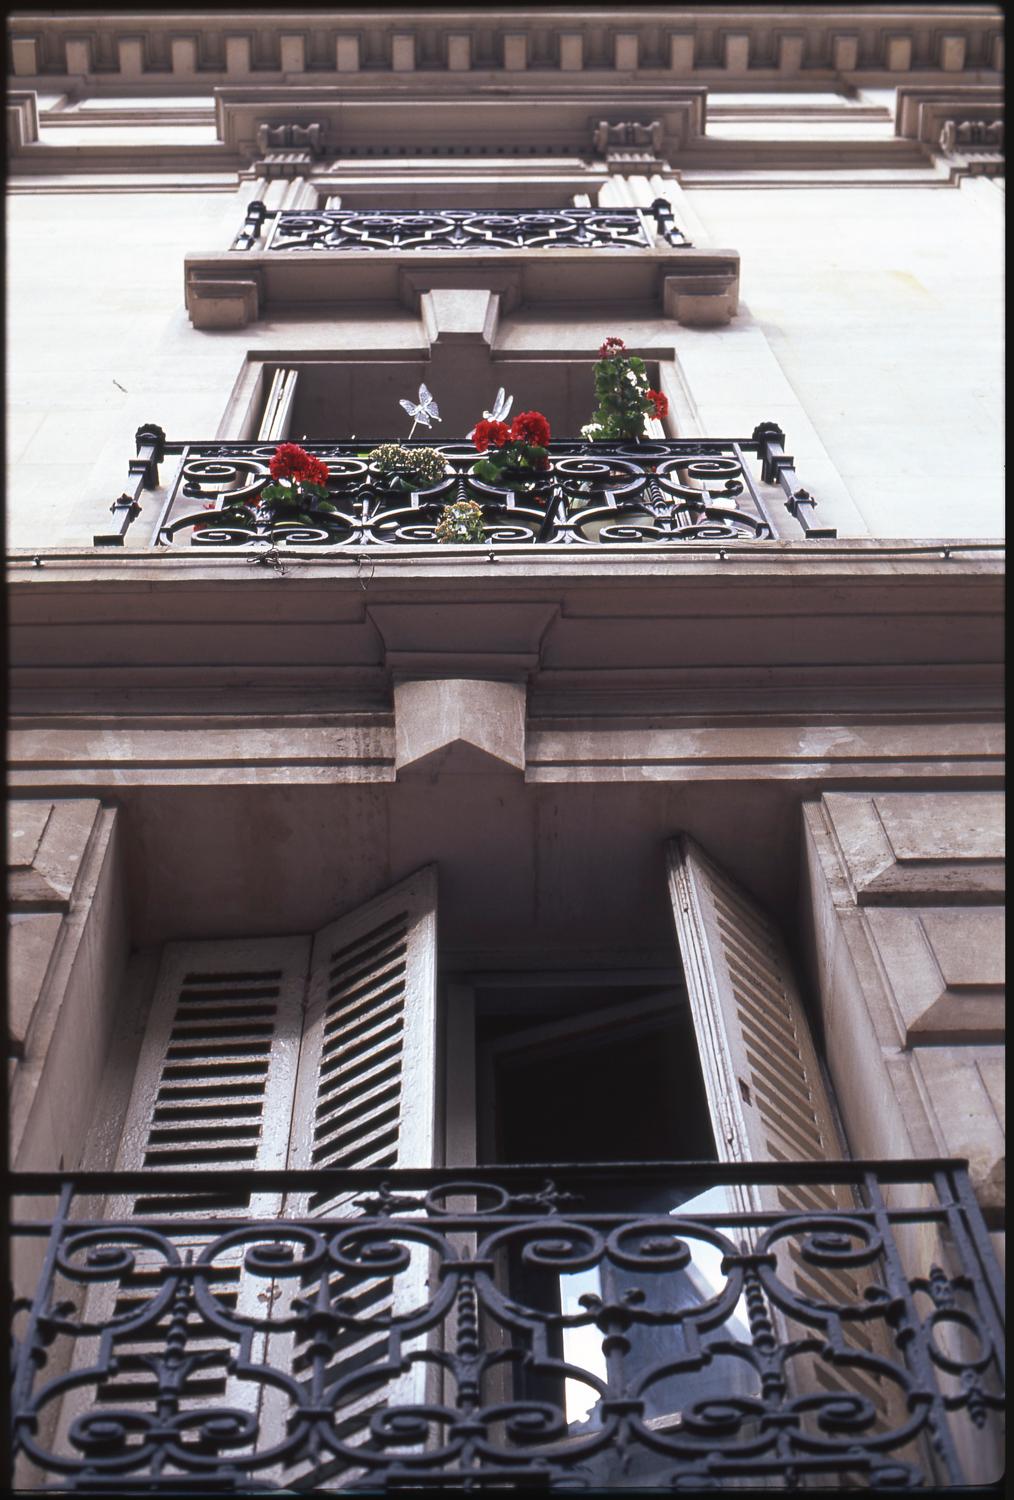 Paul Cooklin Landscape Photograph - Edition 1/10 - Balcony Facade, Paris, France, C-Type Photograph